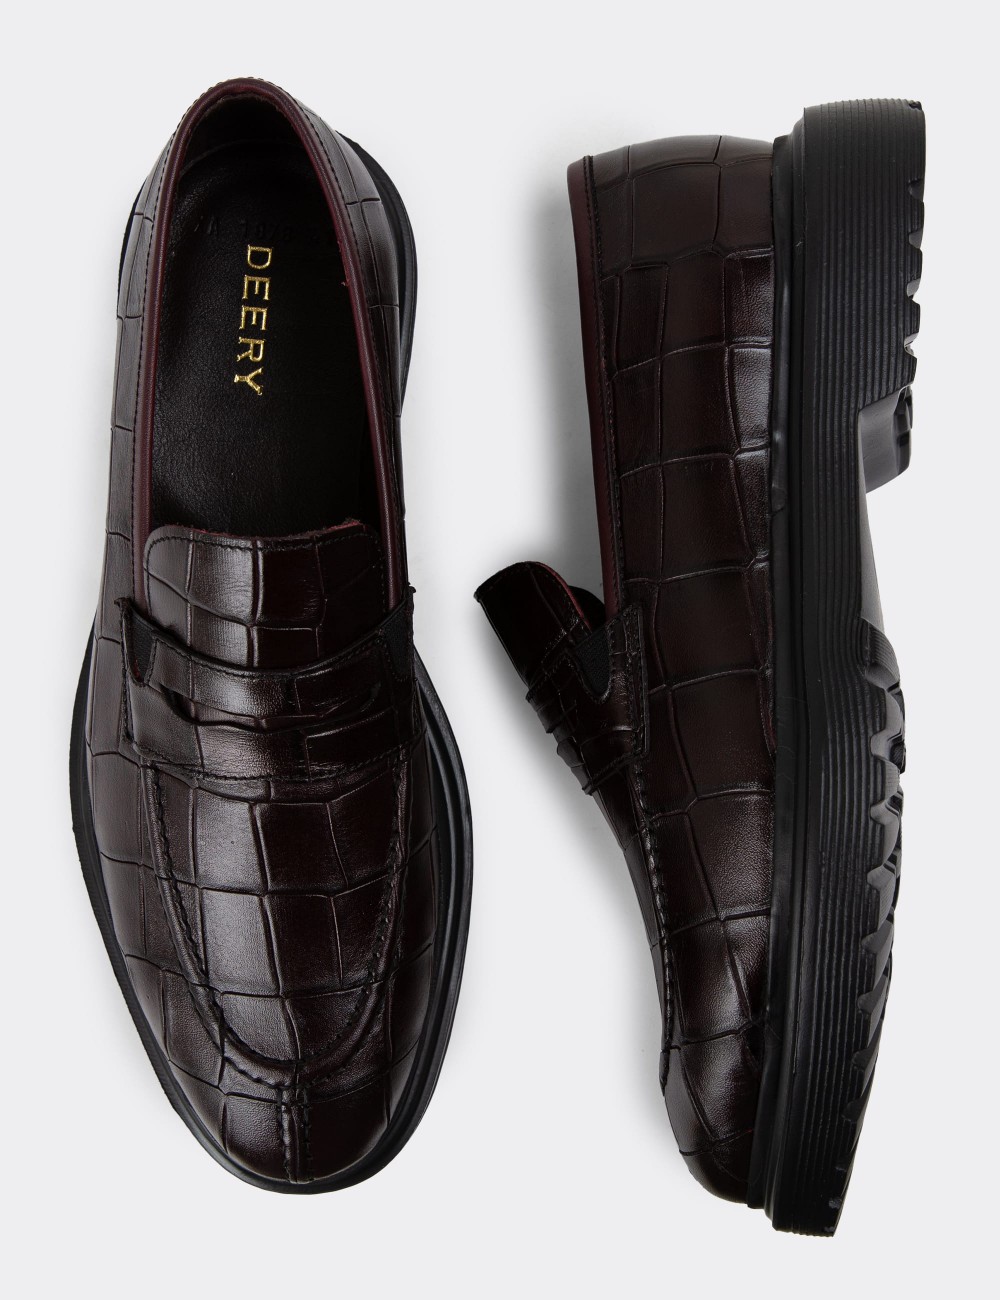 Burgundy Leather Loafers - 01878MBRDE02